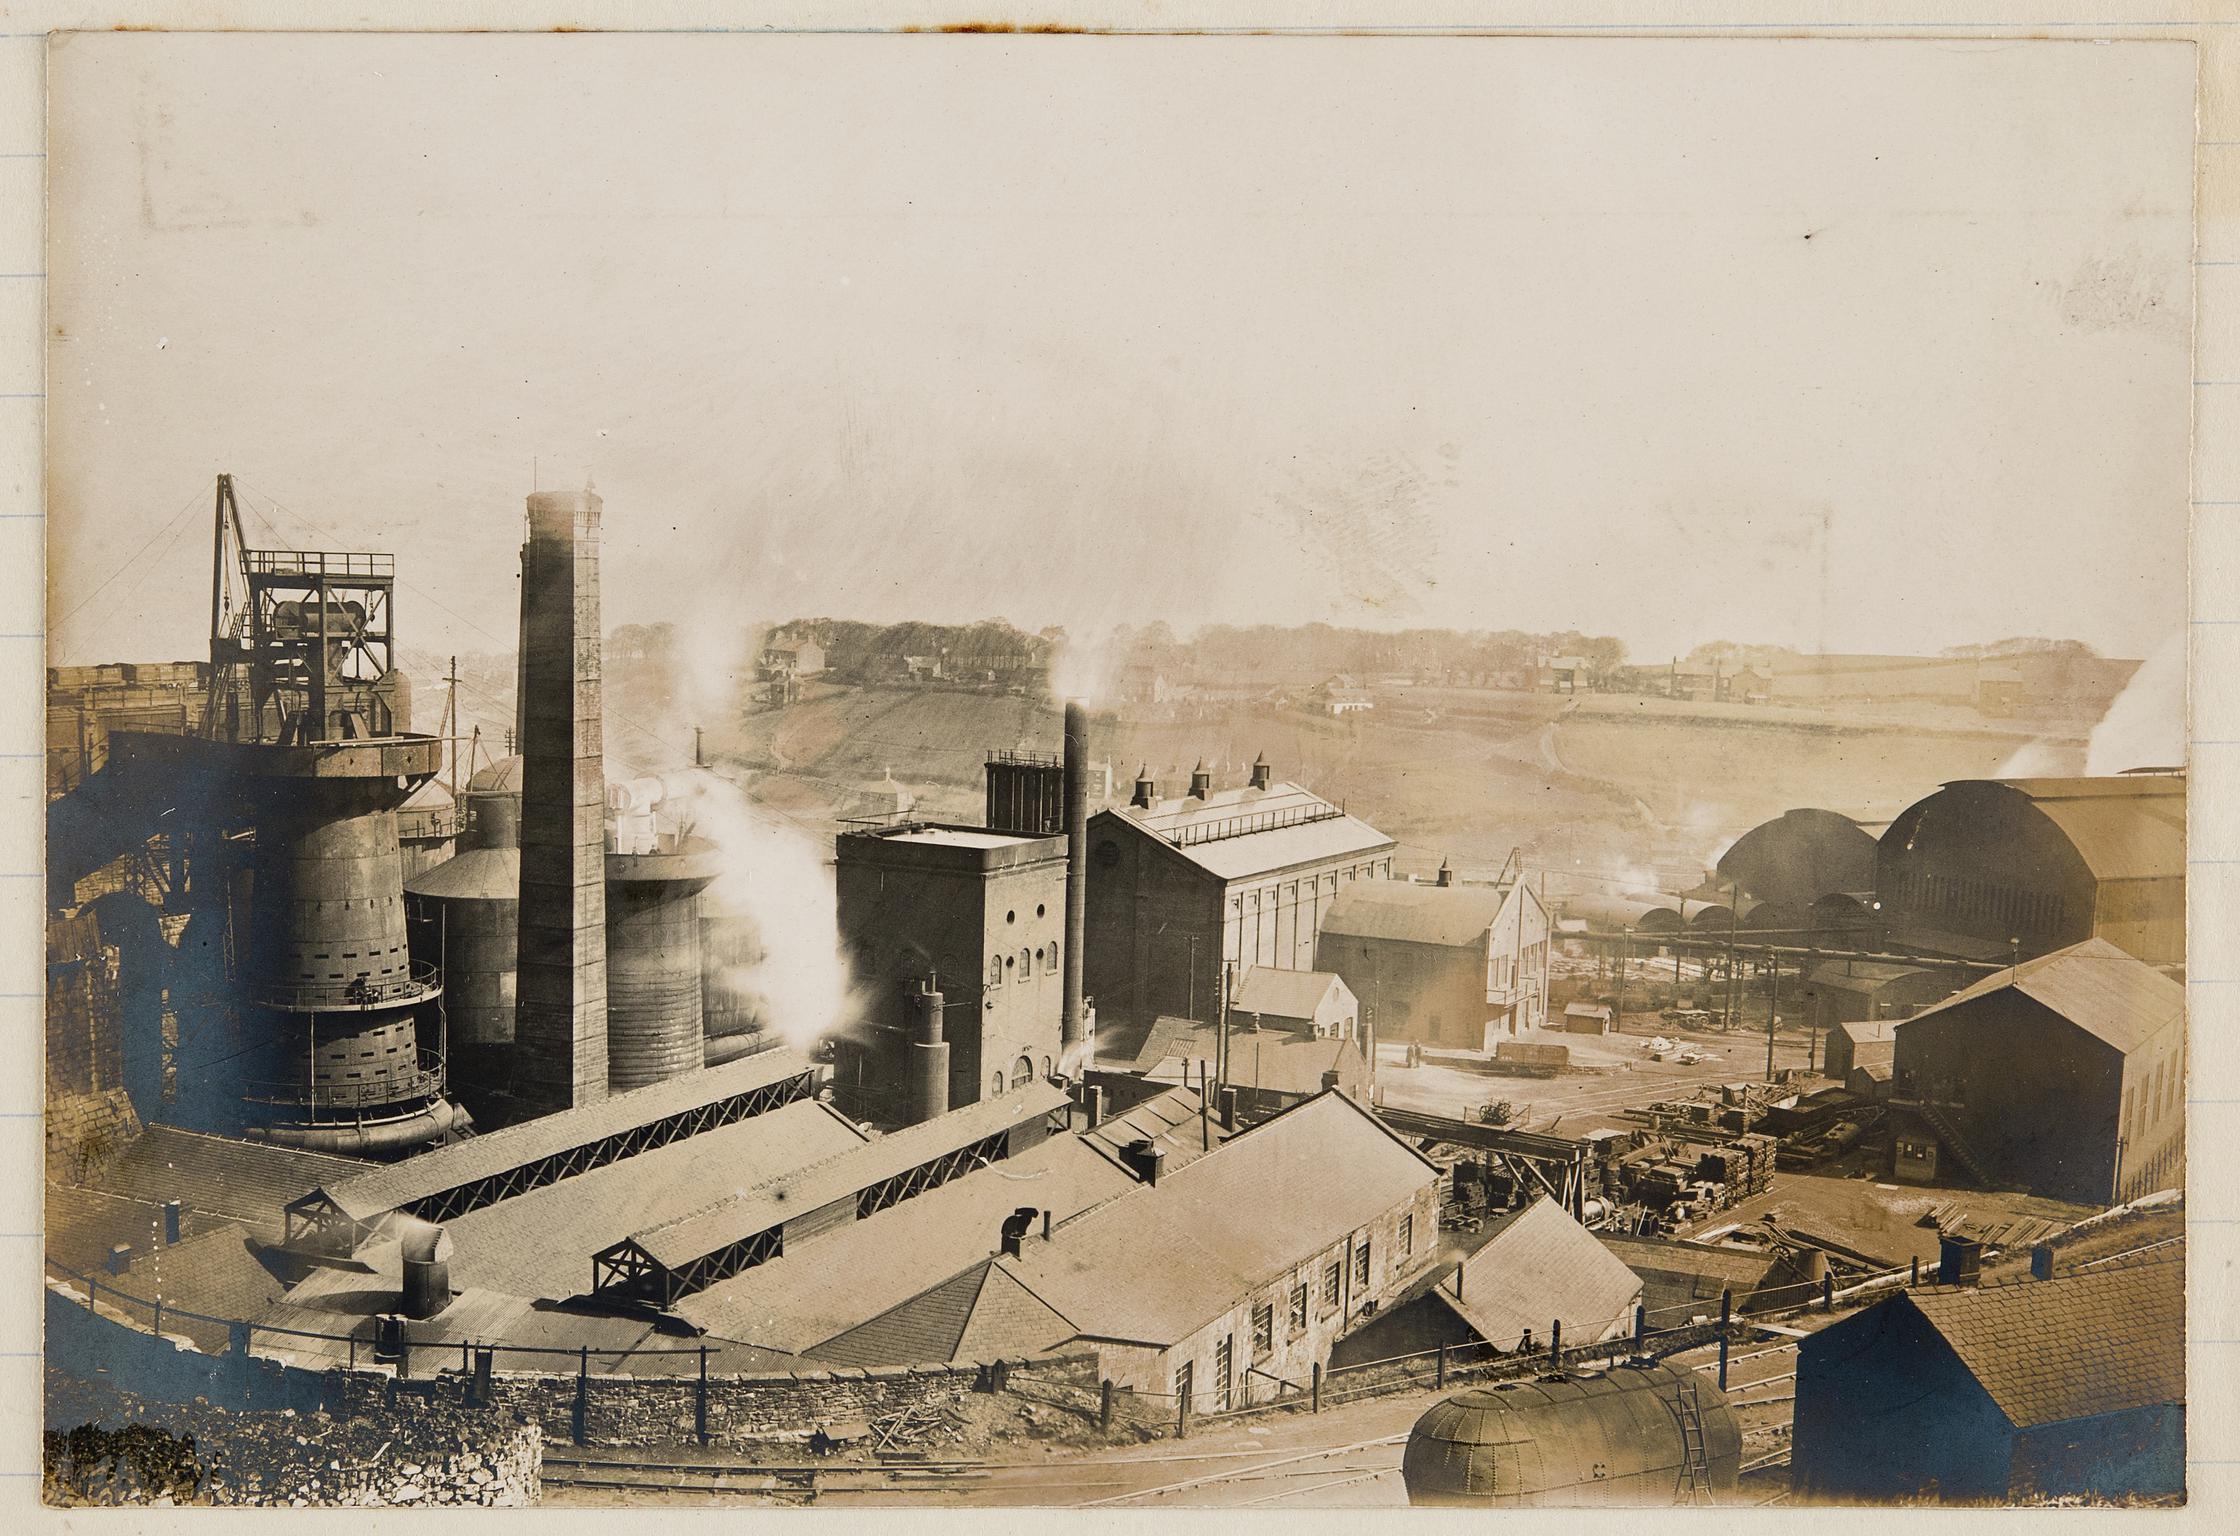 Brymbo ironworks, photograph